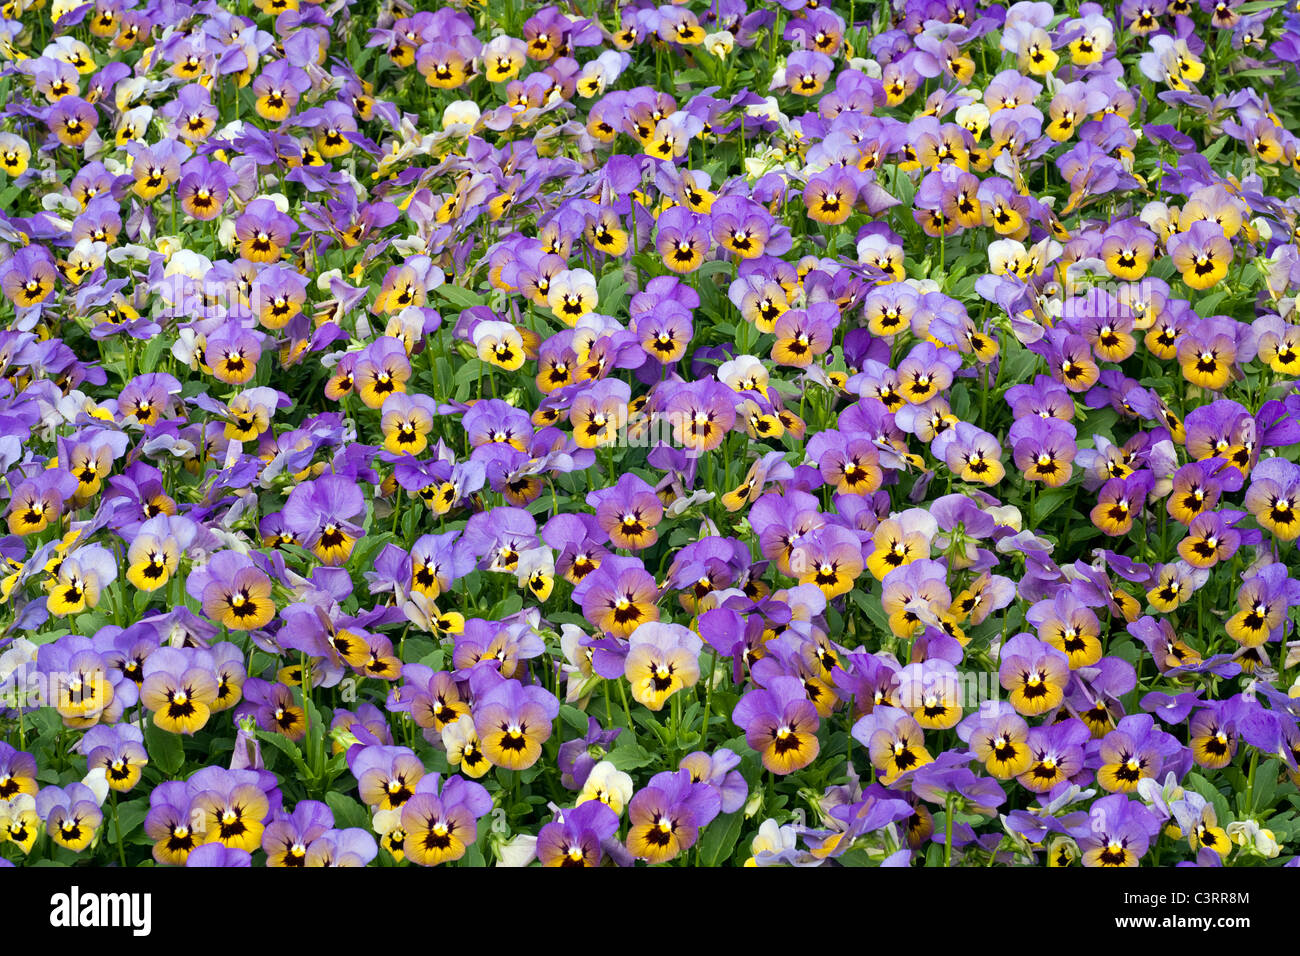 PennyTM Series Pansy Flowers - North Carolina Arboretum - Asheville, North Carolina USA Stock Photo